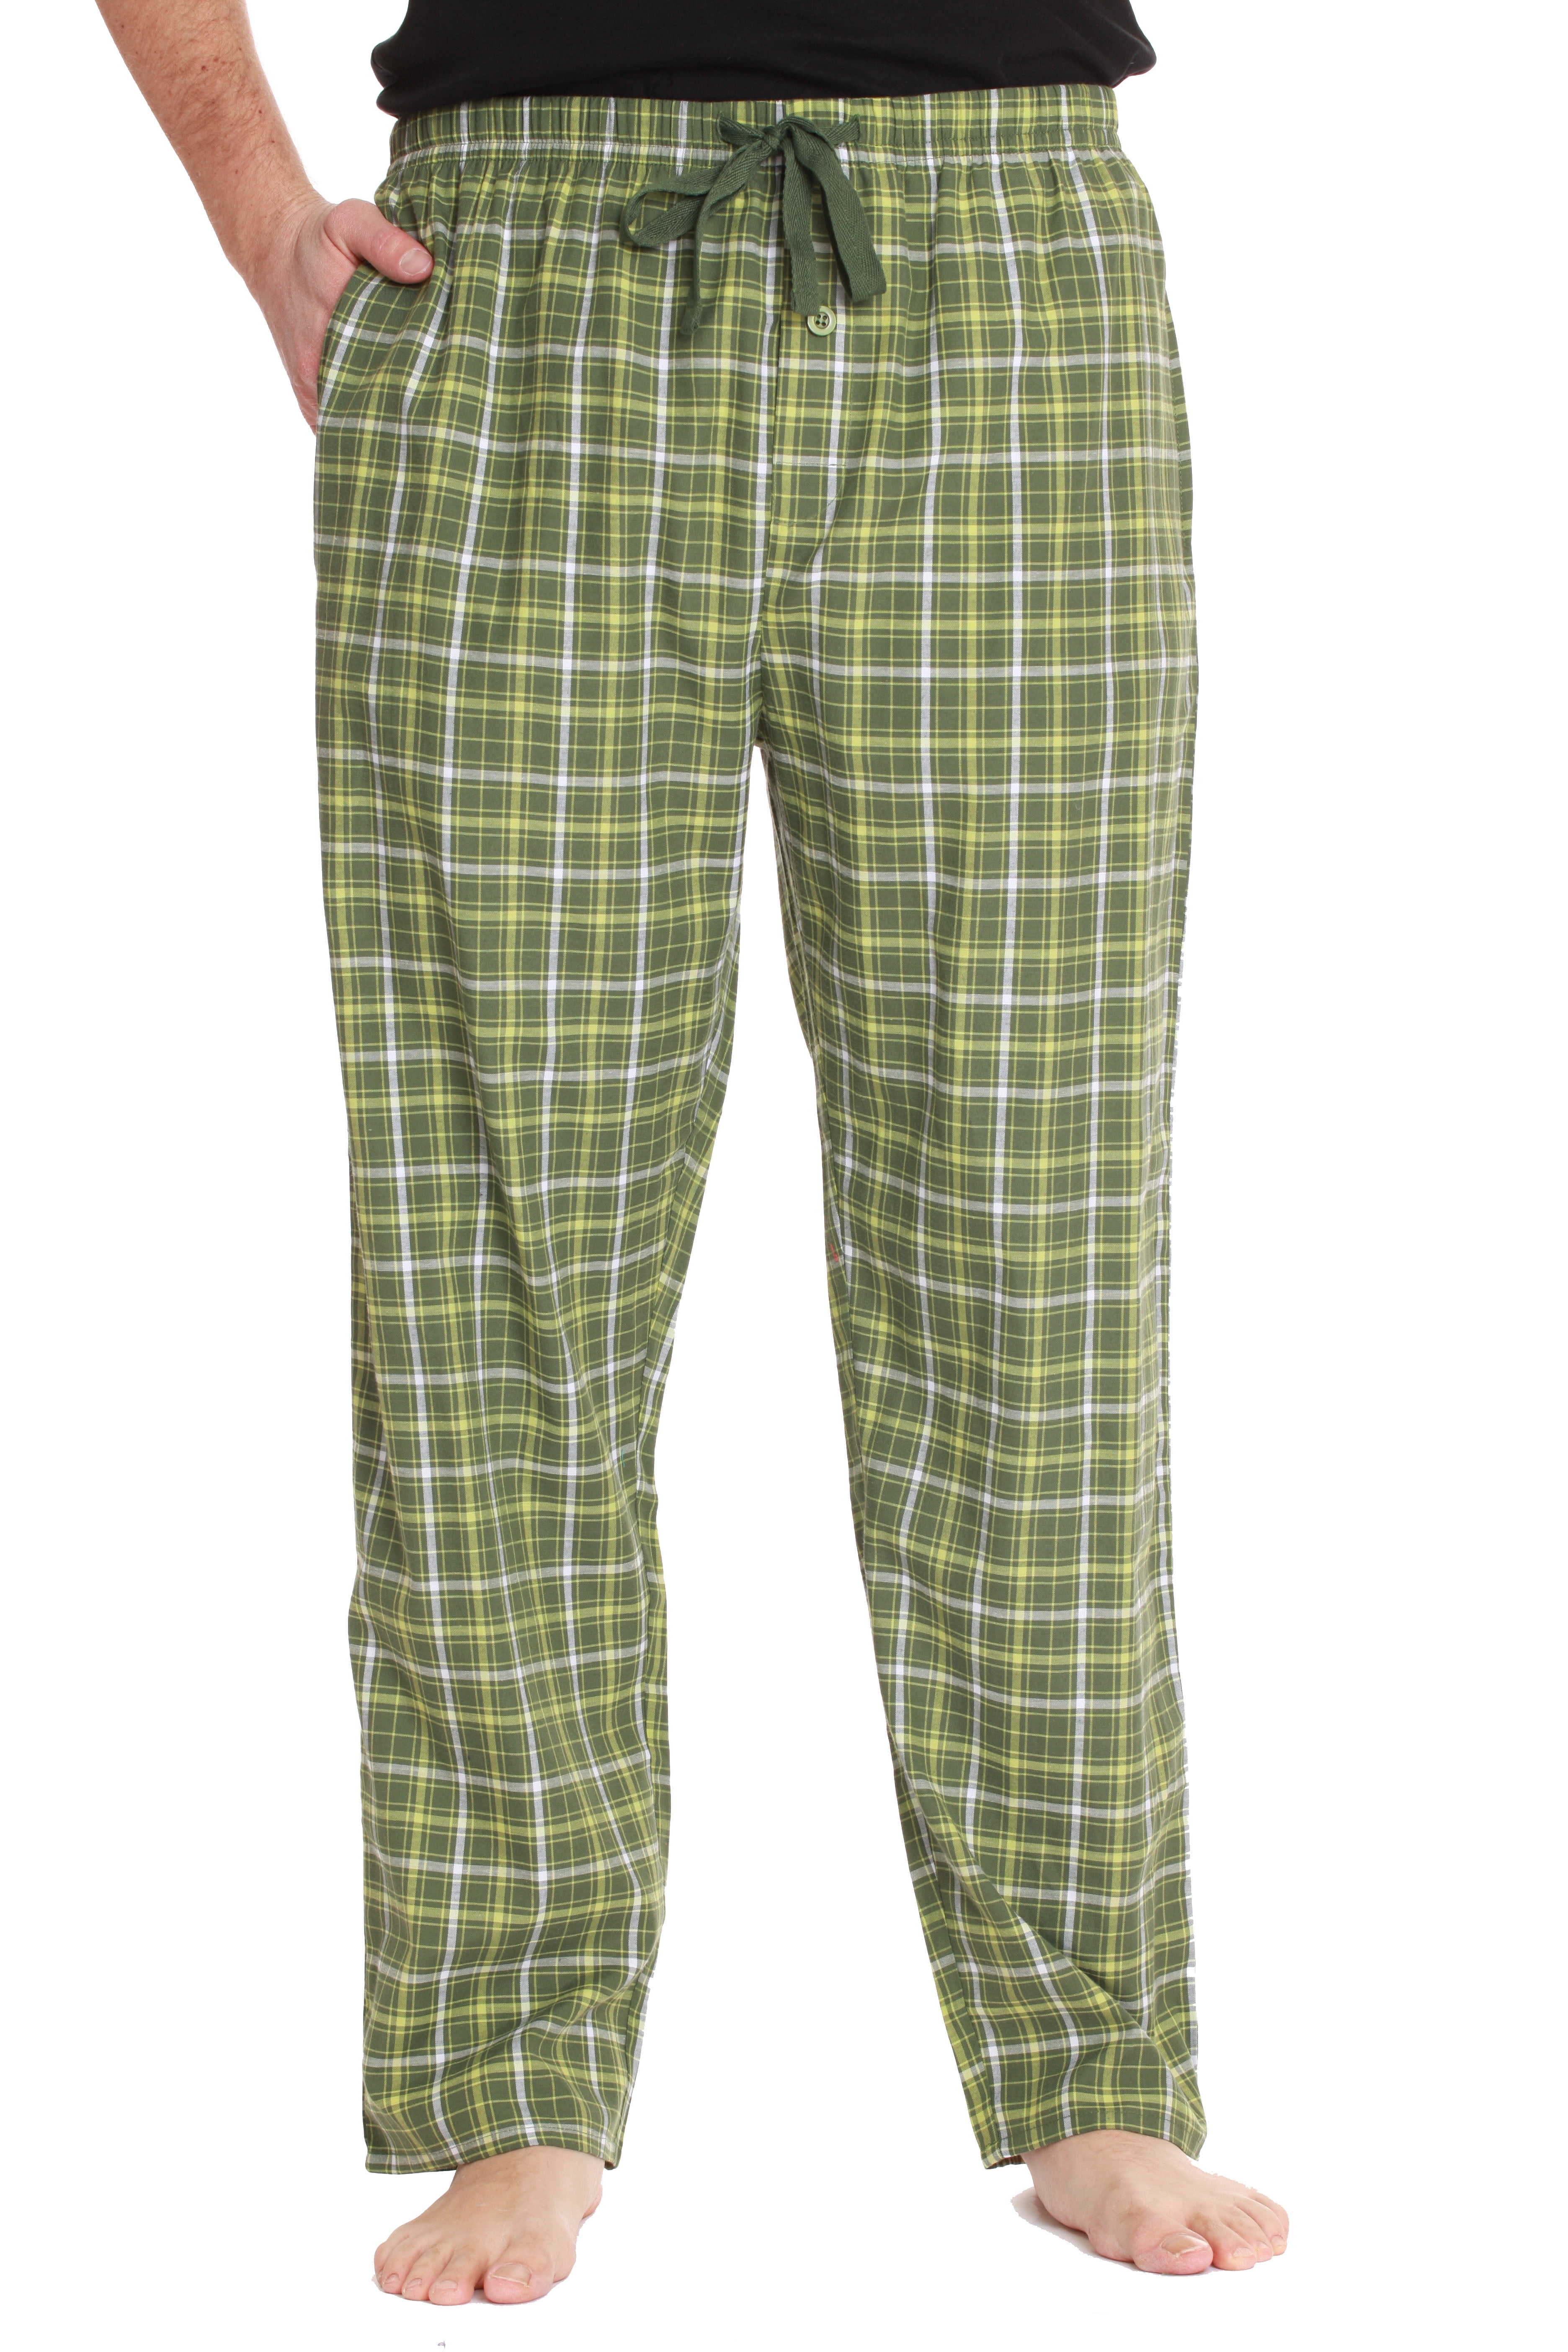 #followme Mens Pajama Pants Pajamas for Men (Olive, Medium) - Walmart.com